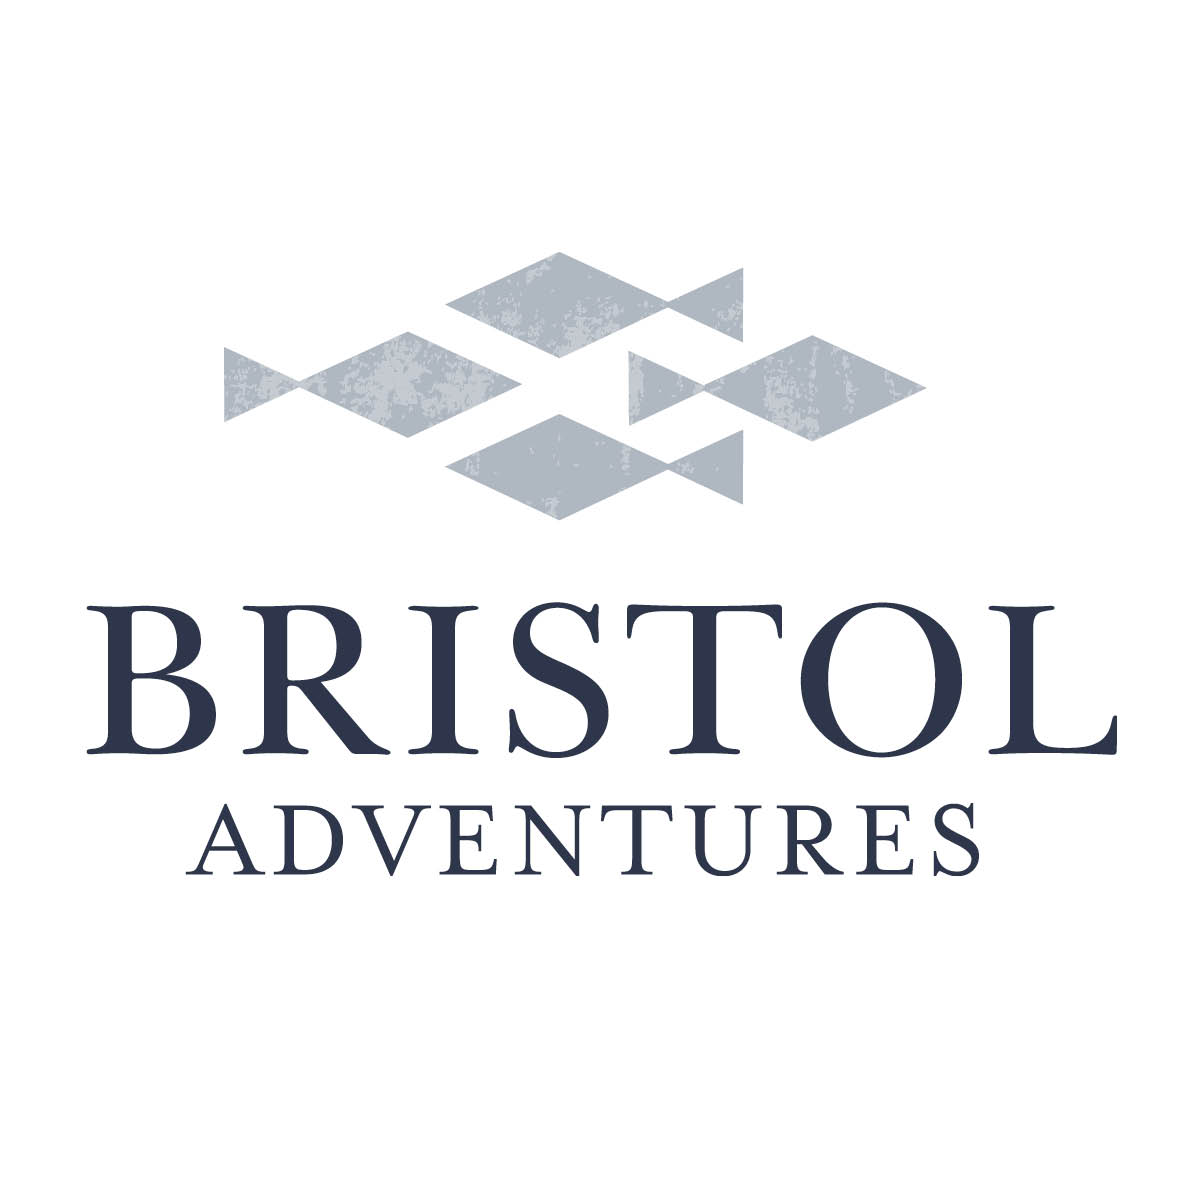 Bristol Adventures Identity